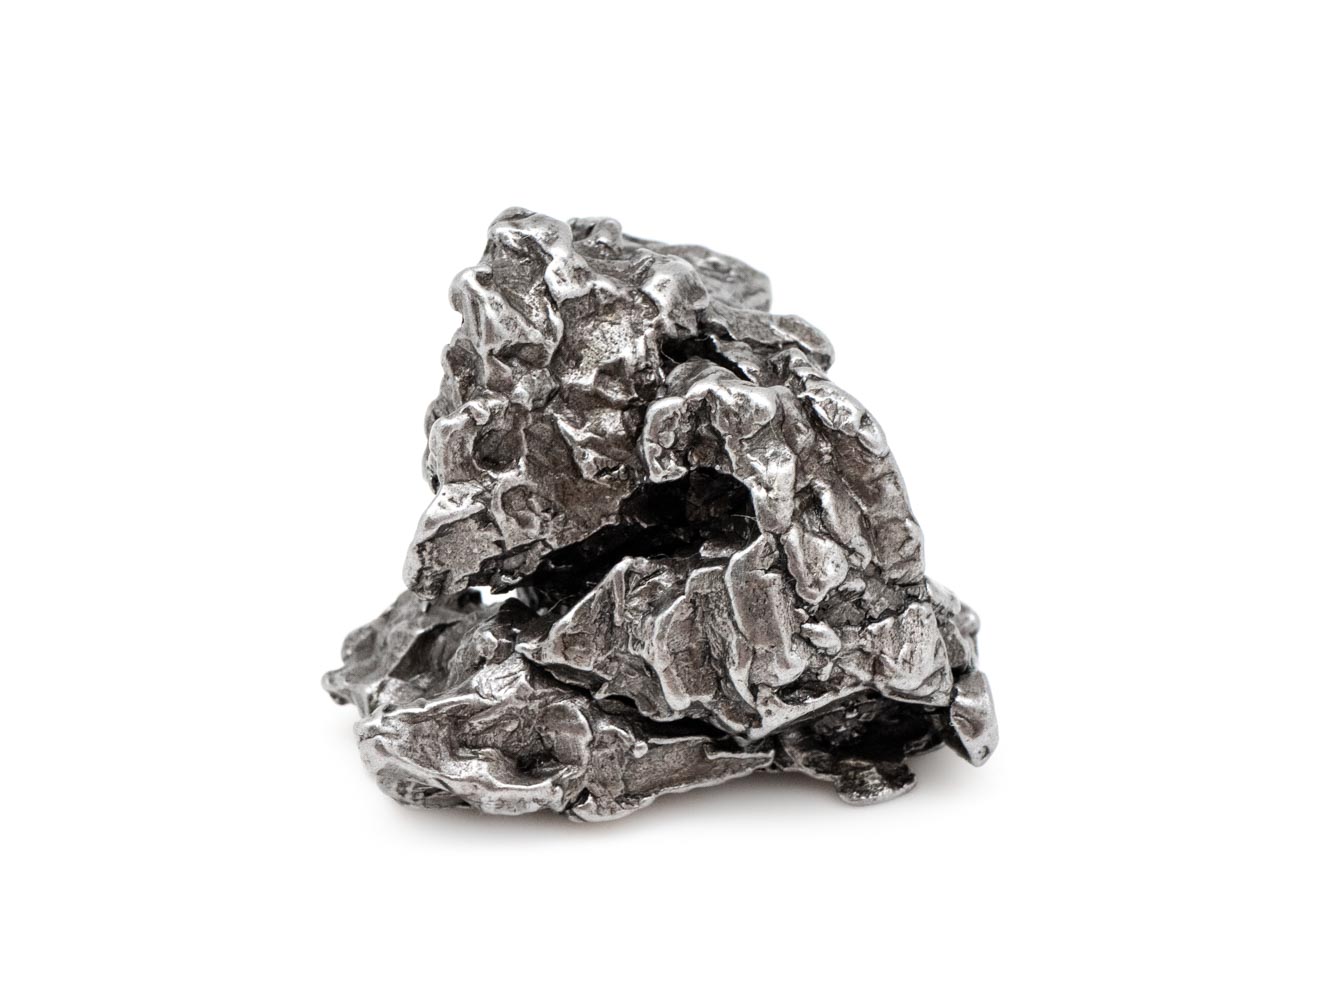 Iron Meteorites For Sale | Aerolite Meteorites, Incorporated